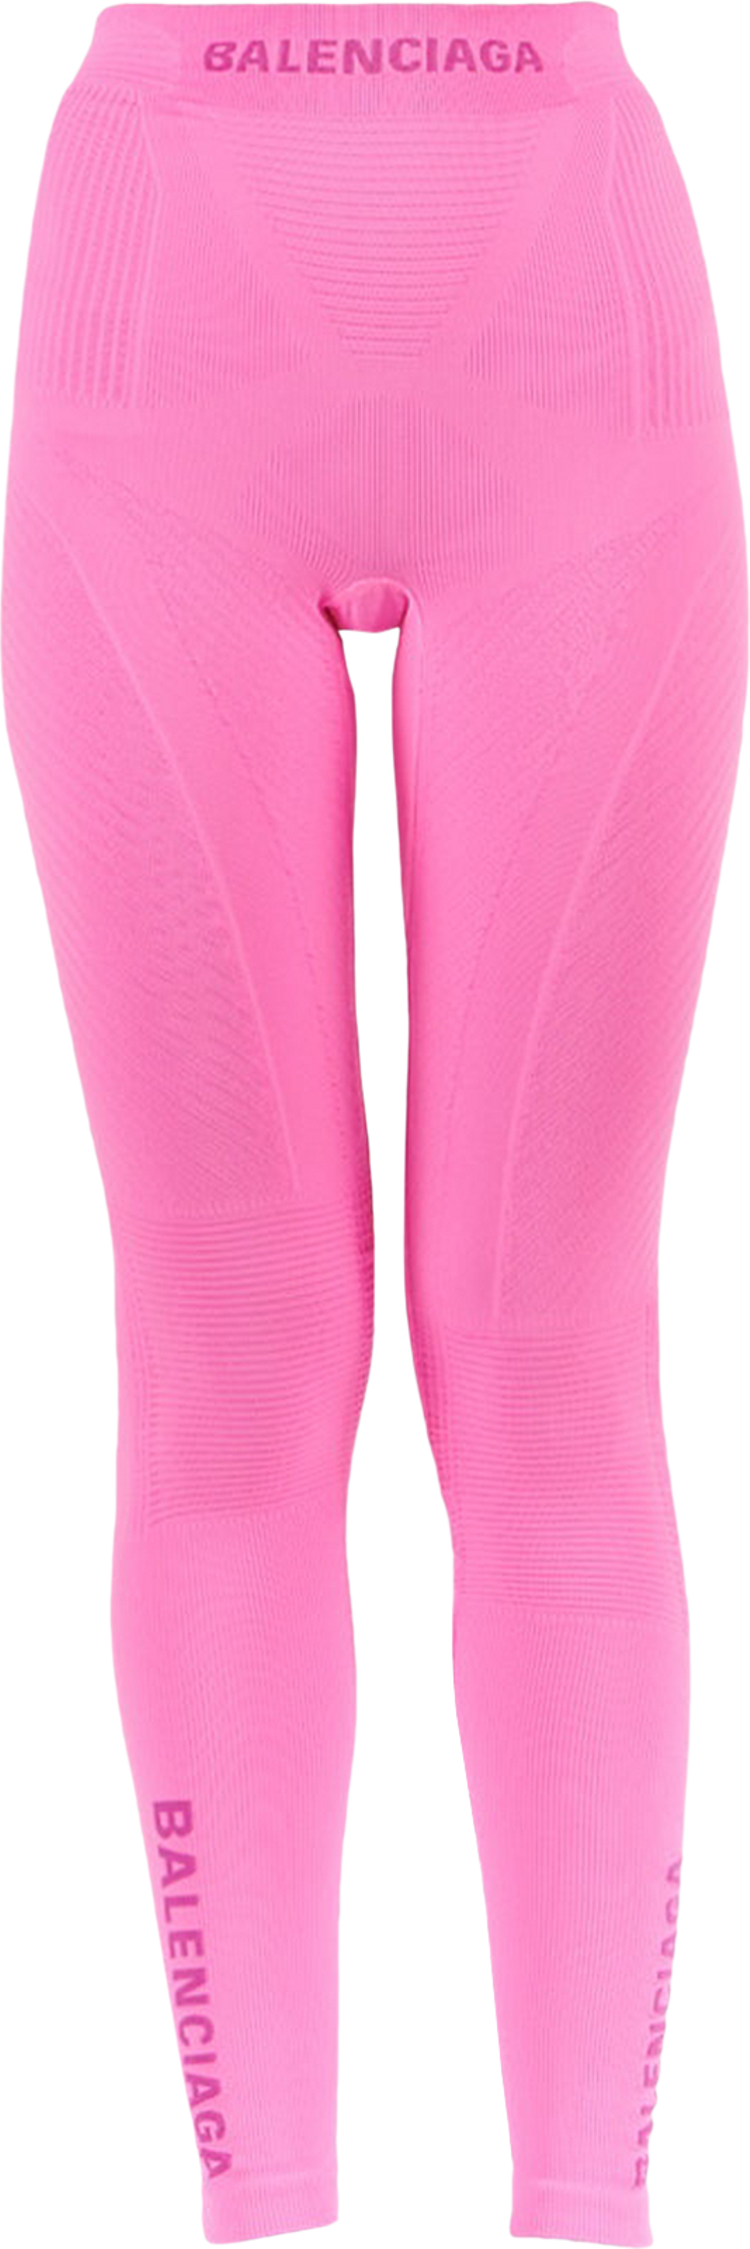 Buy Balenciaga Athletic Leggings 'Neon Pink' - 719684 4C9B4 5600